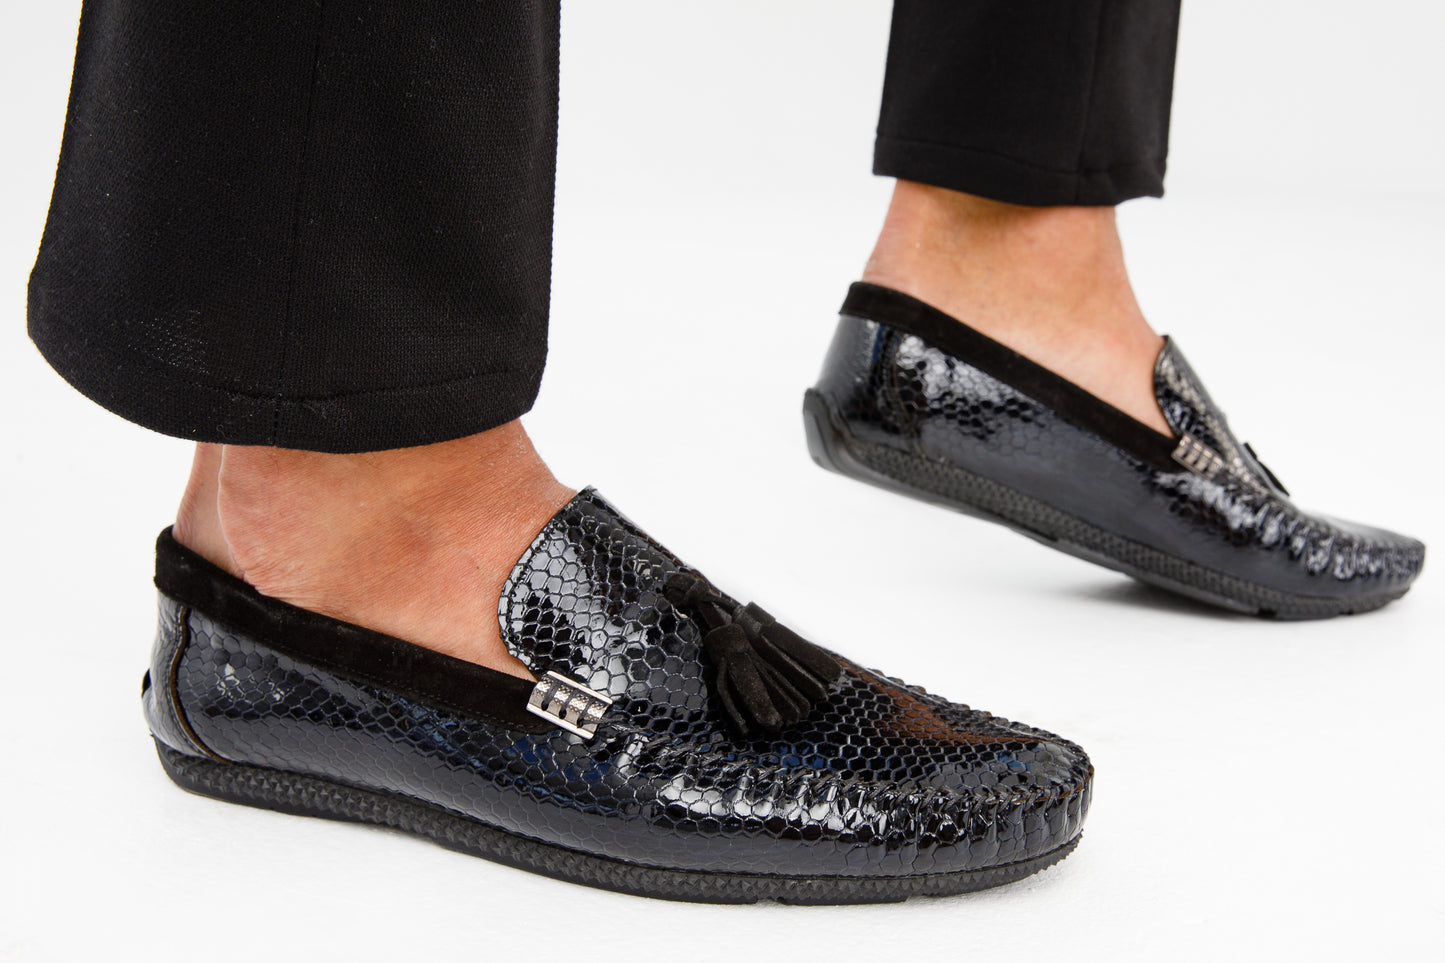 The Cordova Black Patent Leather Tassel Loafer Men Shoe